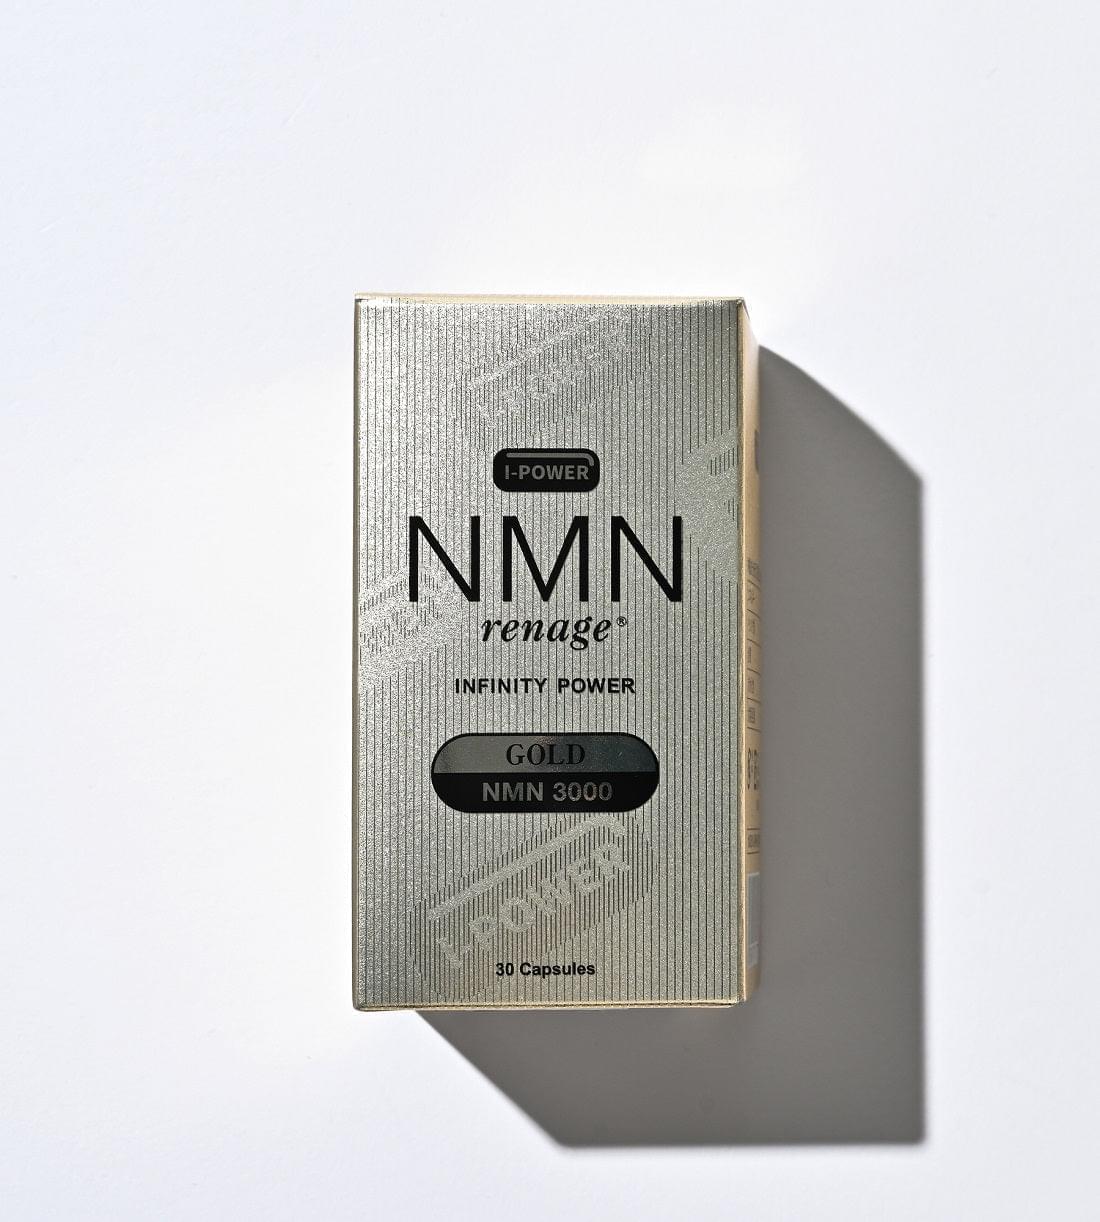 NMN renage GOLD 3000 Infinity Power